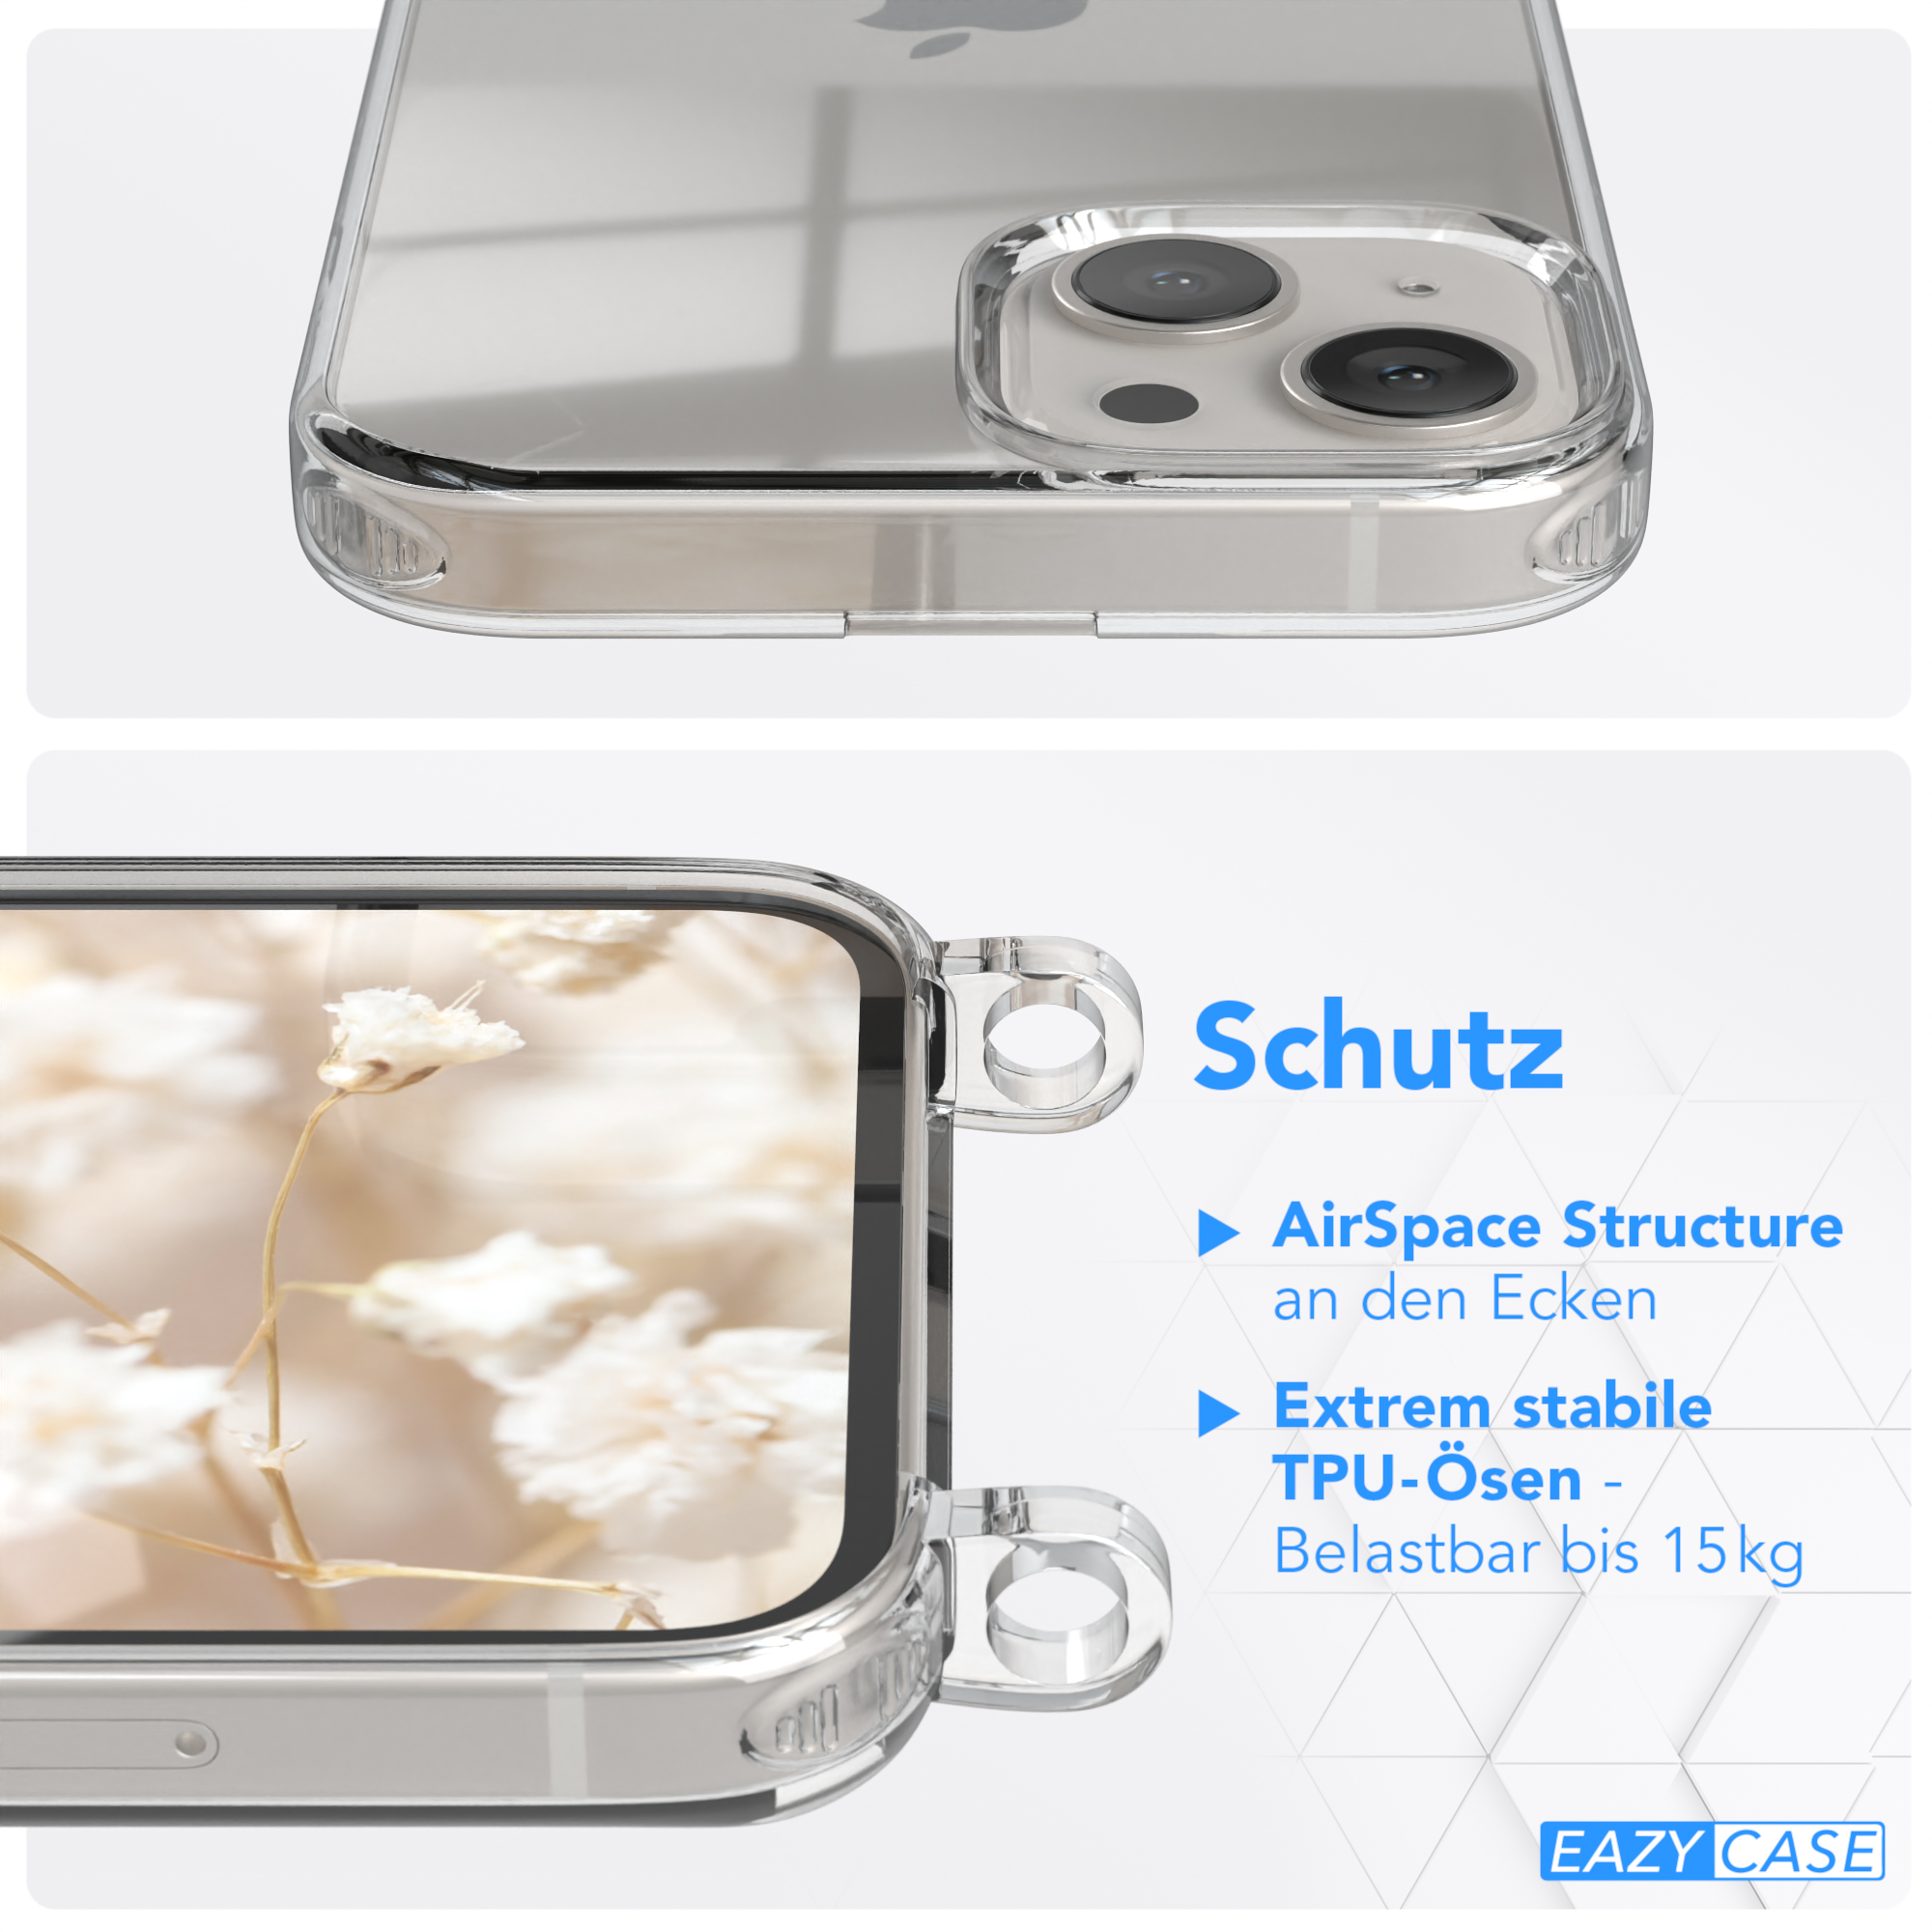 CASE Apple, Style, iPhone Grün Handyhülle EAZY Boho 13, Umhängetasche, Transparente Violett / Kordel mit